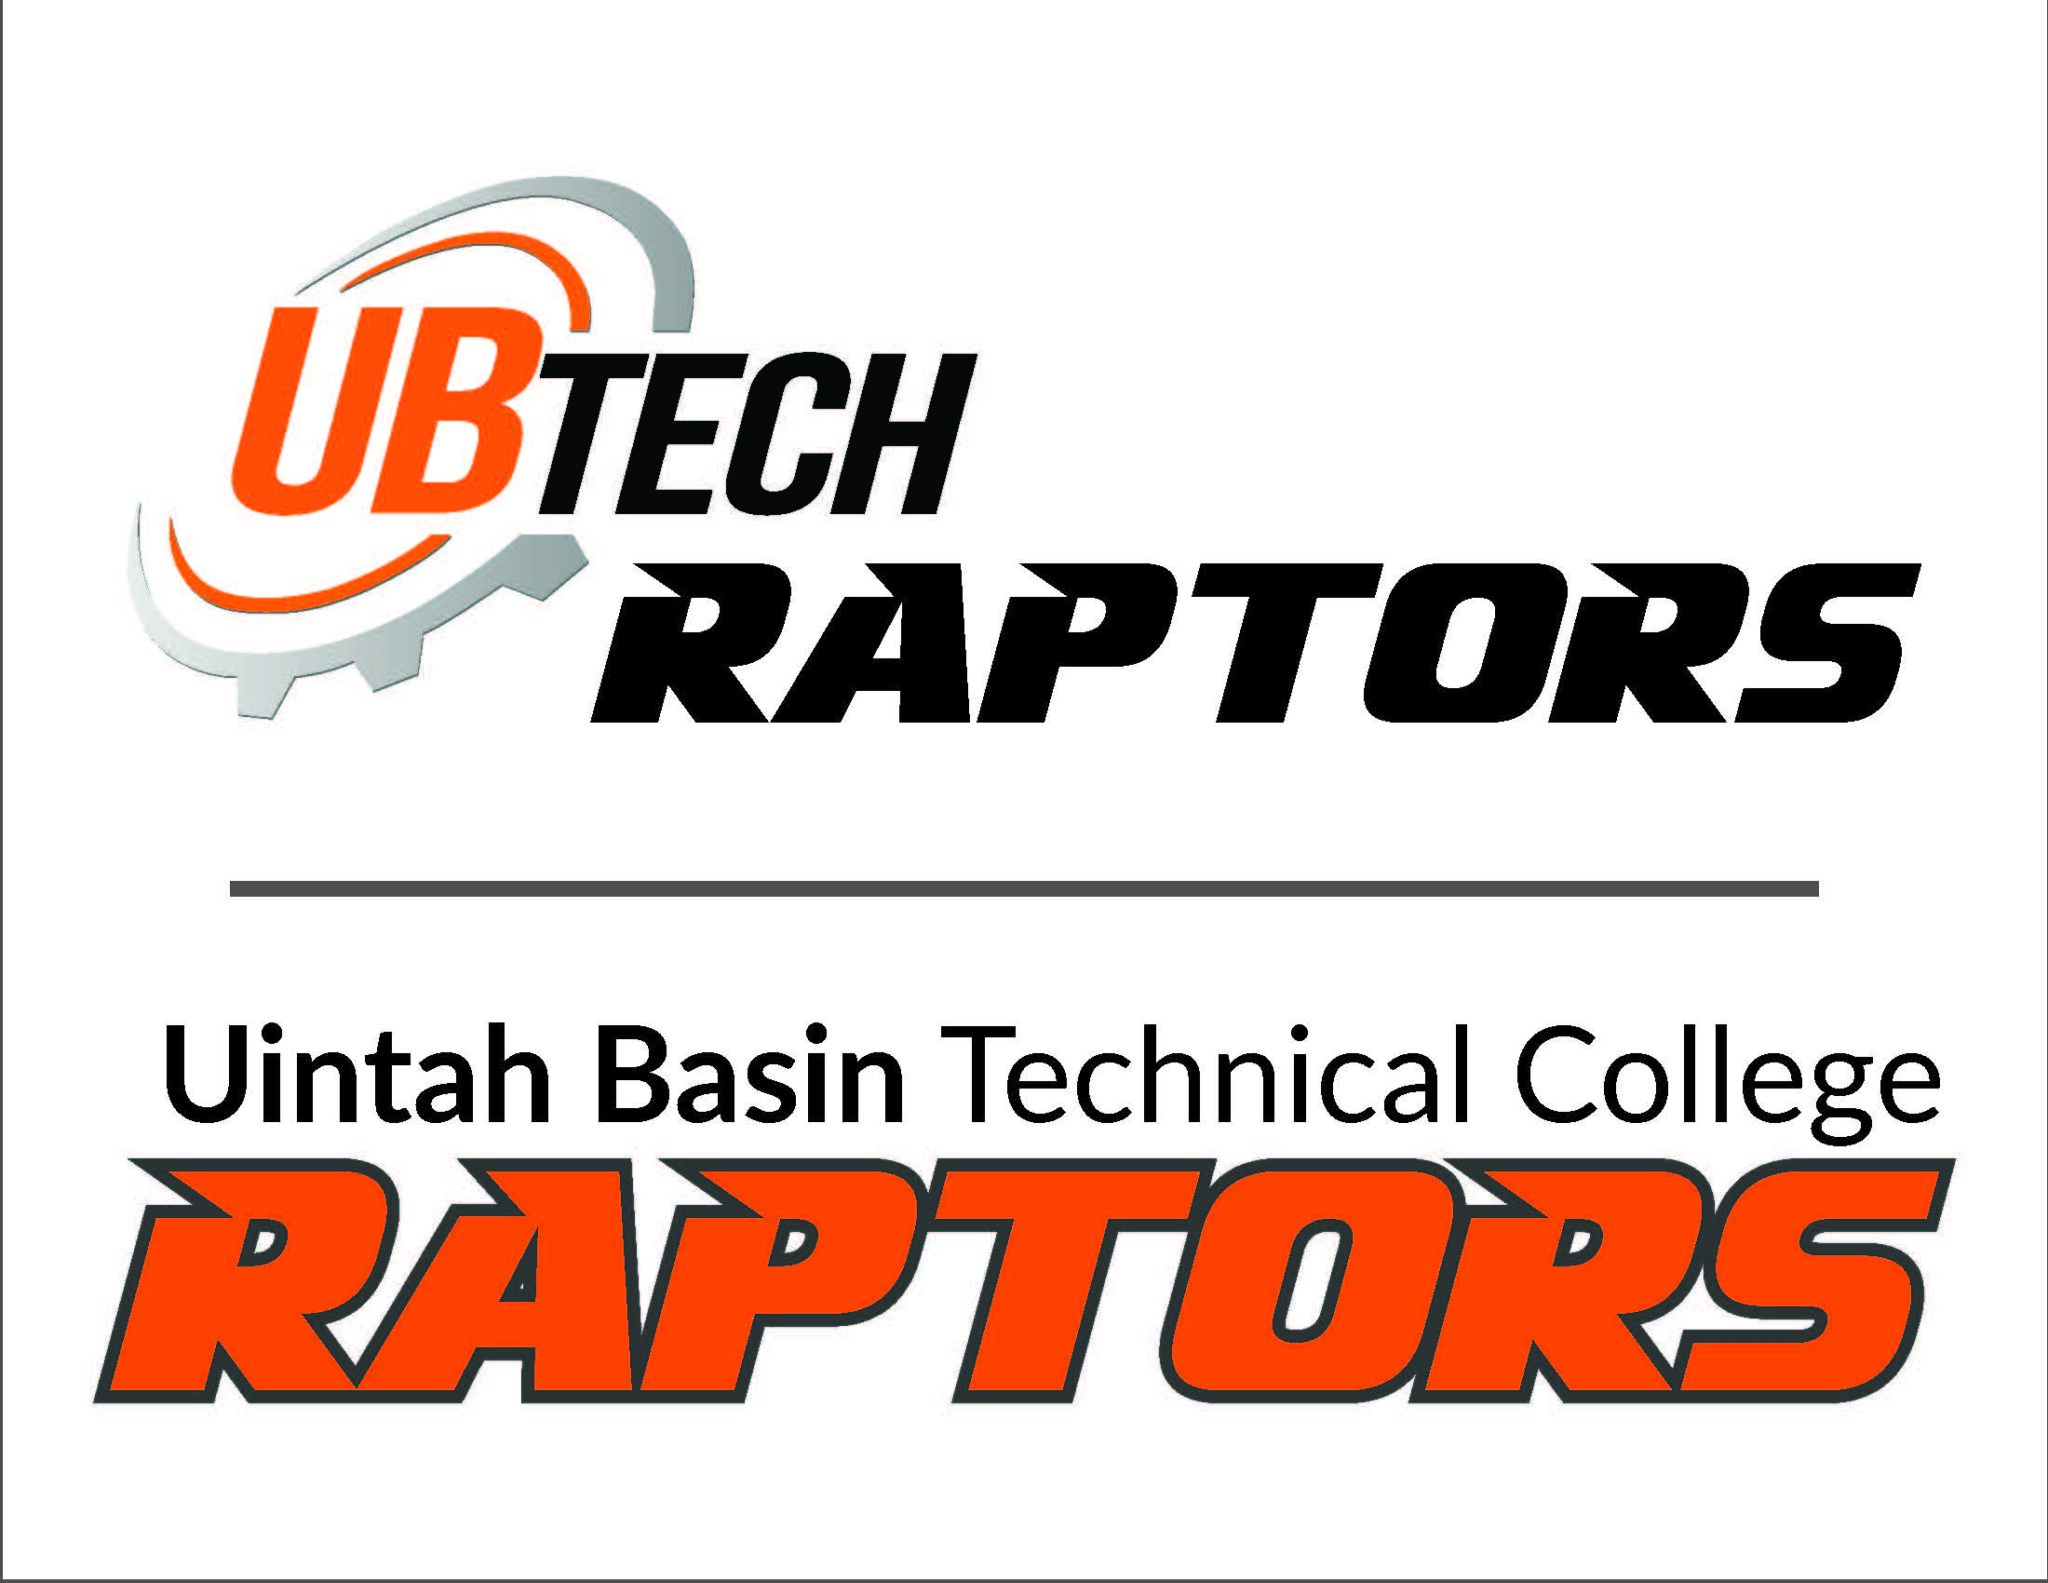 UBTech Raptors